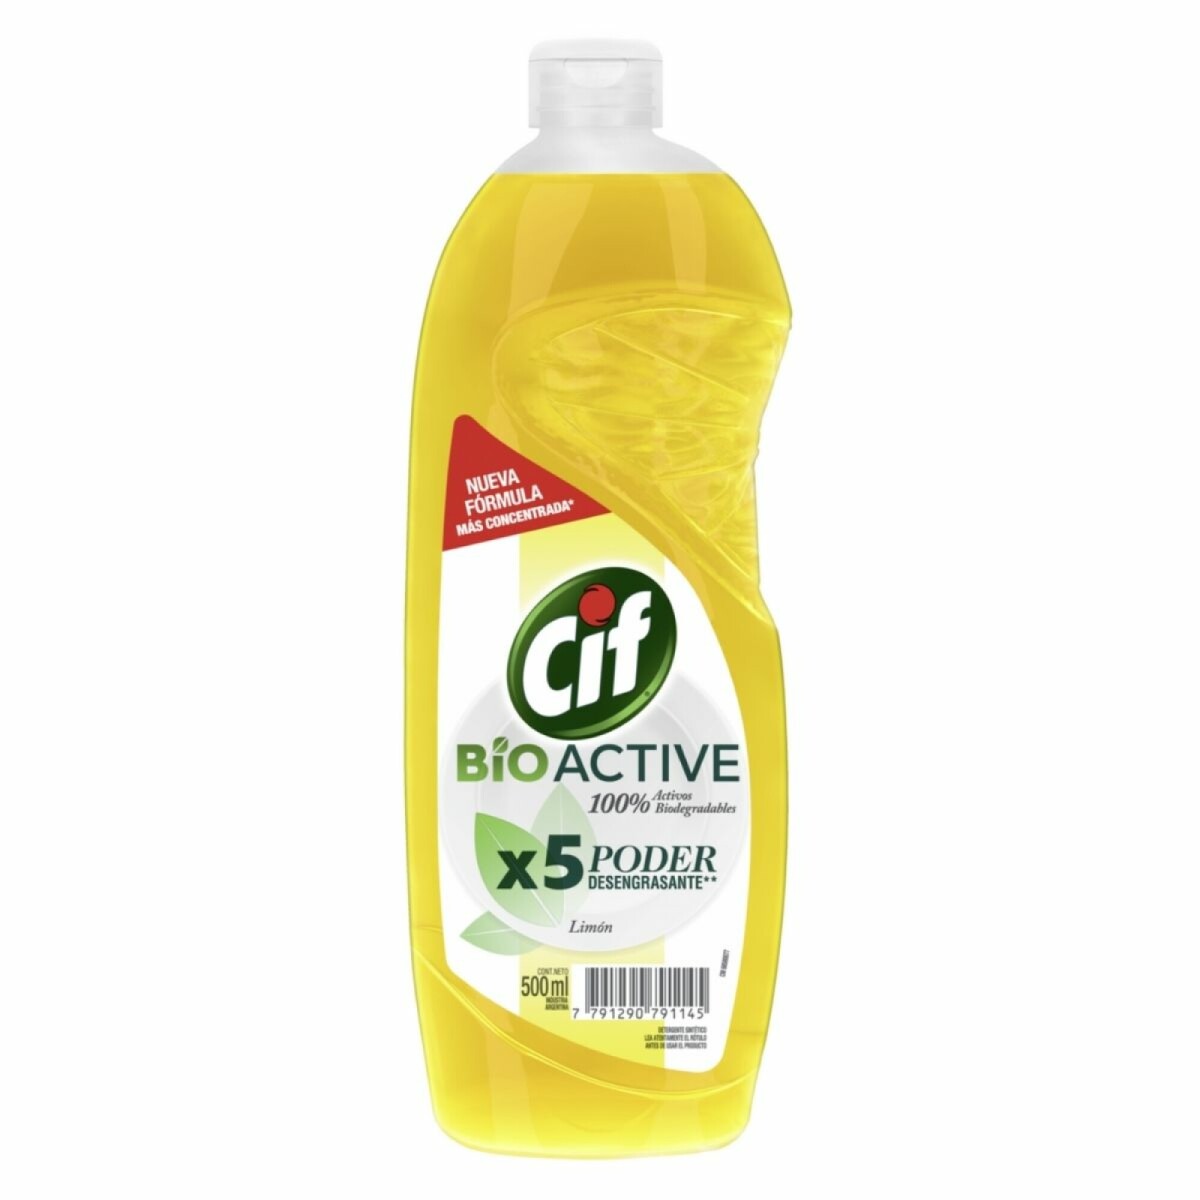 Detergente CIF BioActive 500ml - Limón 